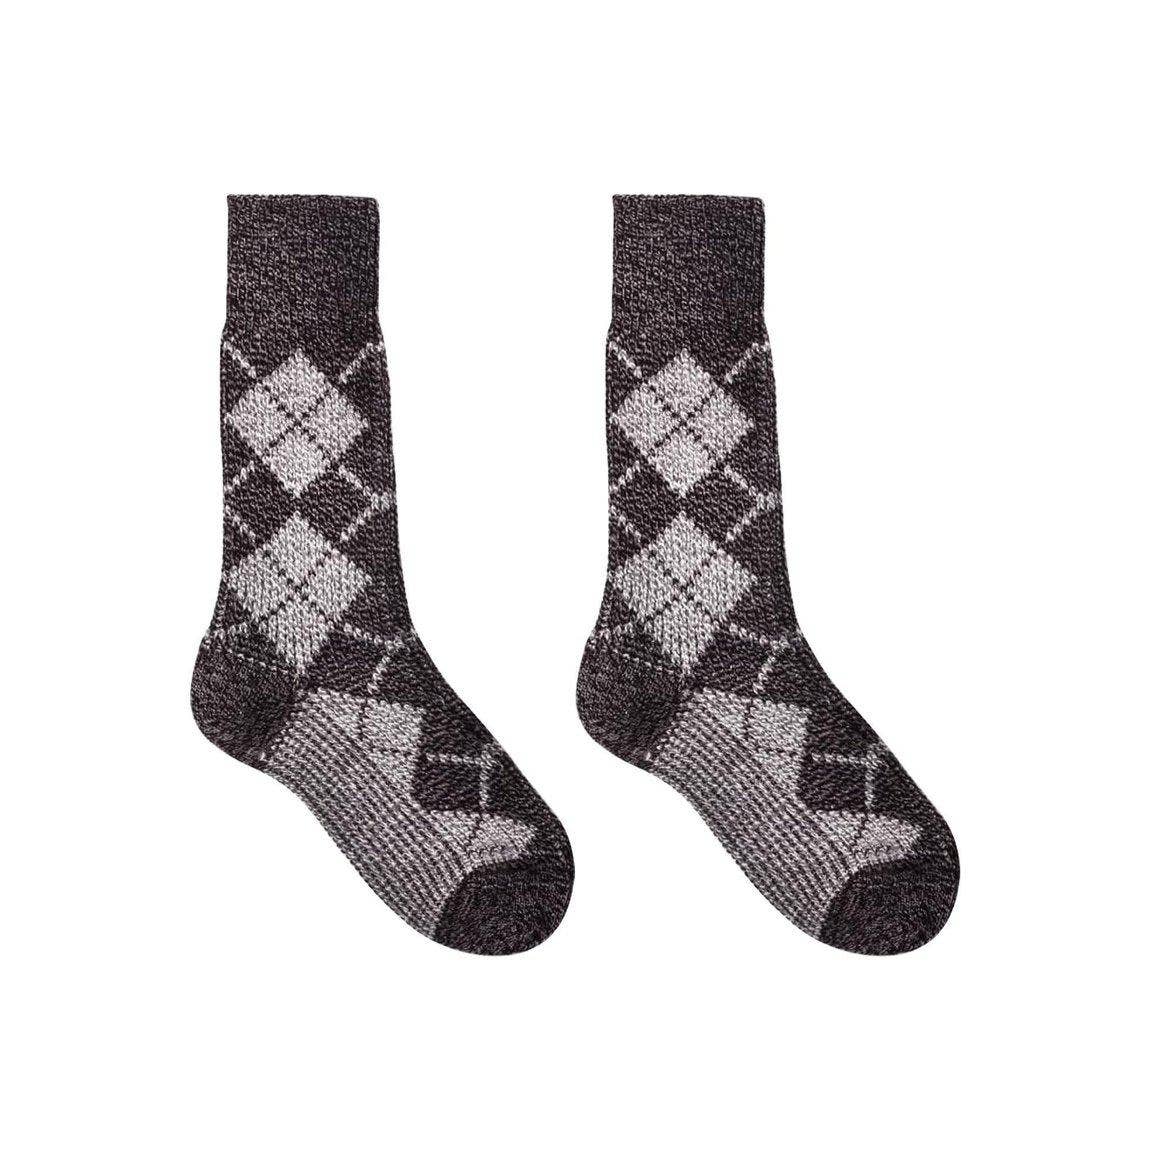 Nordic Socks Soft COZY™  Warm (Vagn - Charcoal)  - Unisex: Medium-2